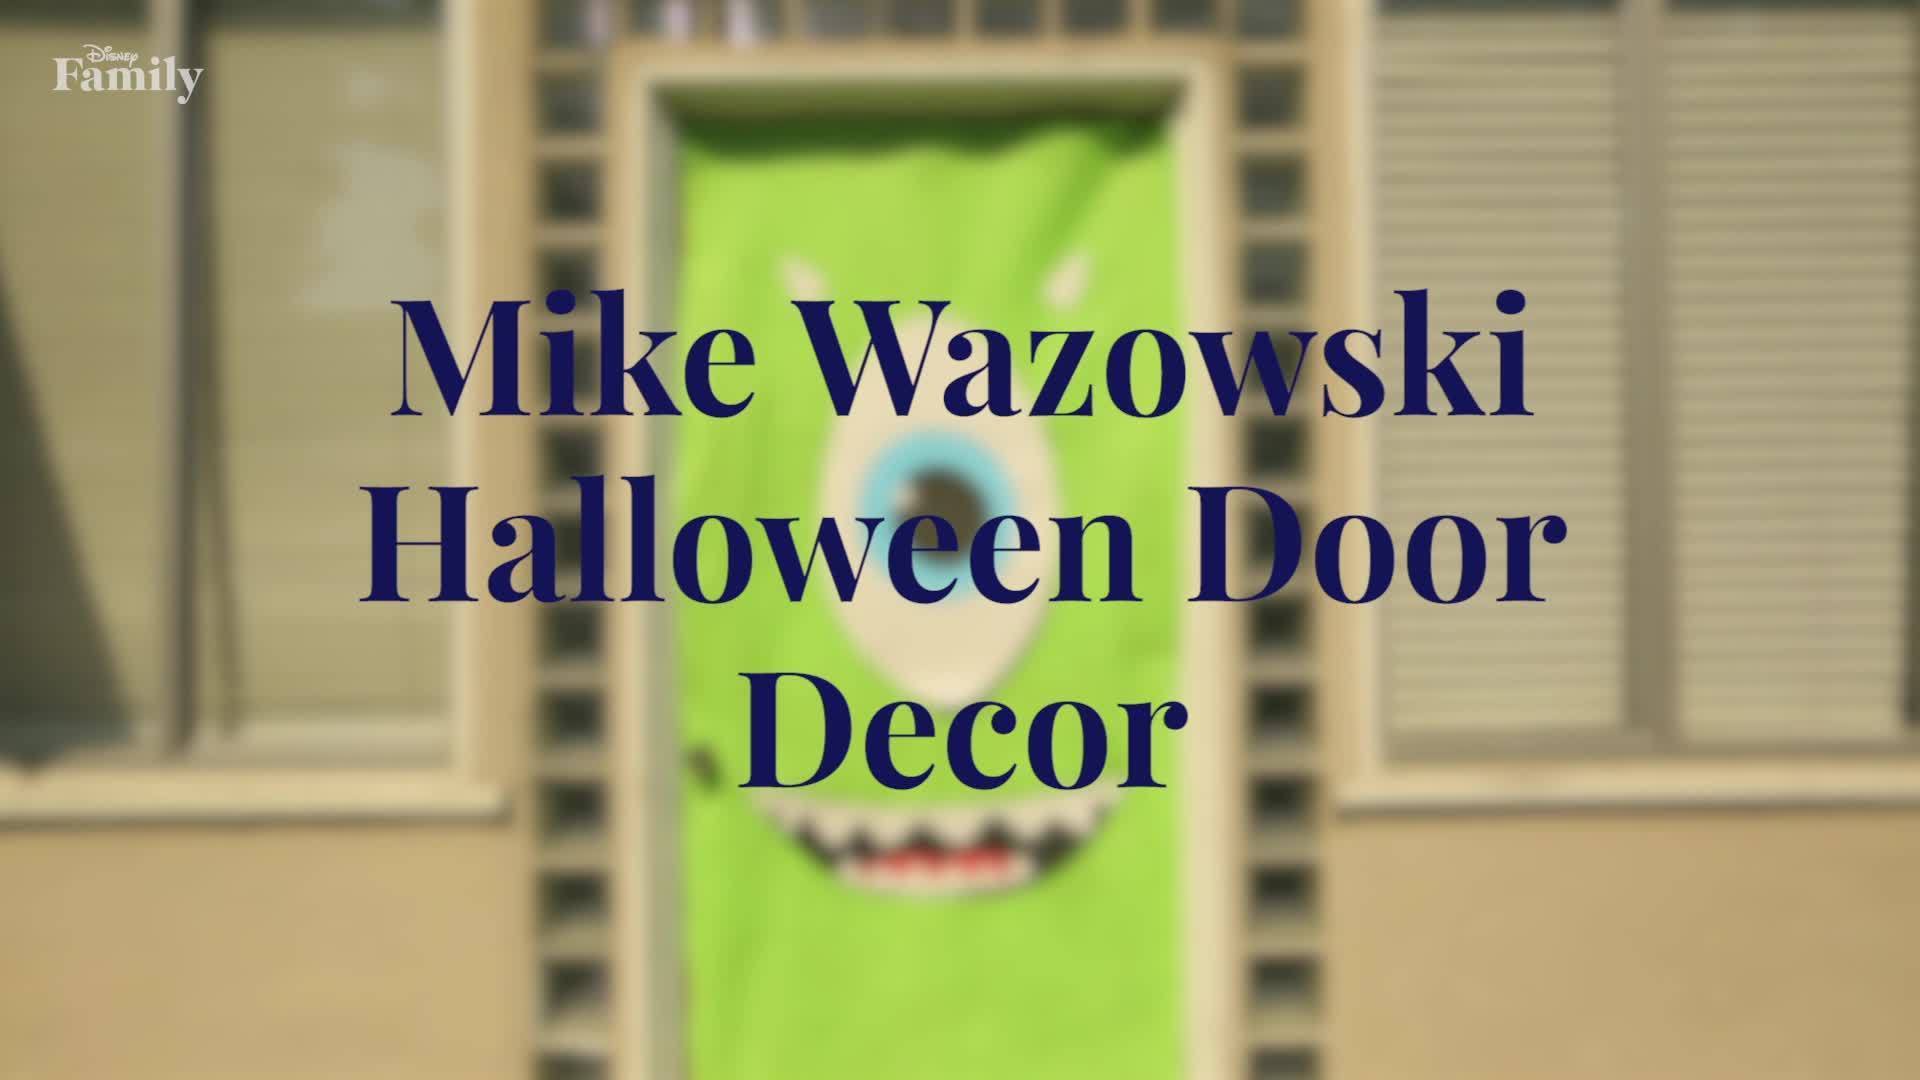 Mike Wazowski Halloween Door Decor | Disney Family